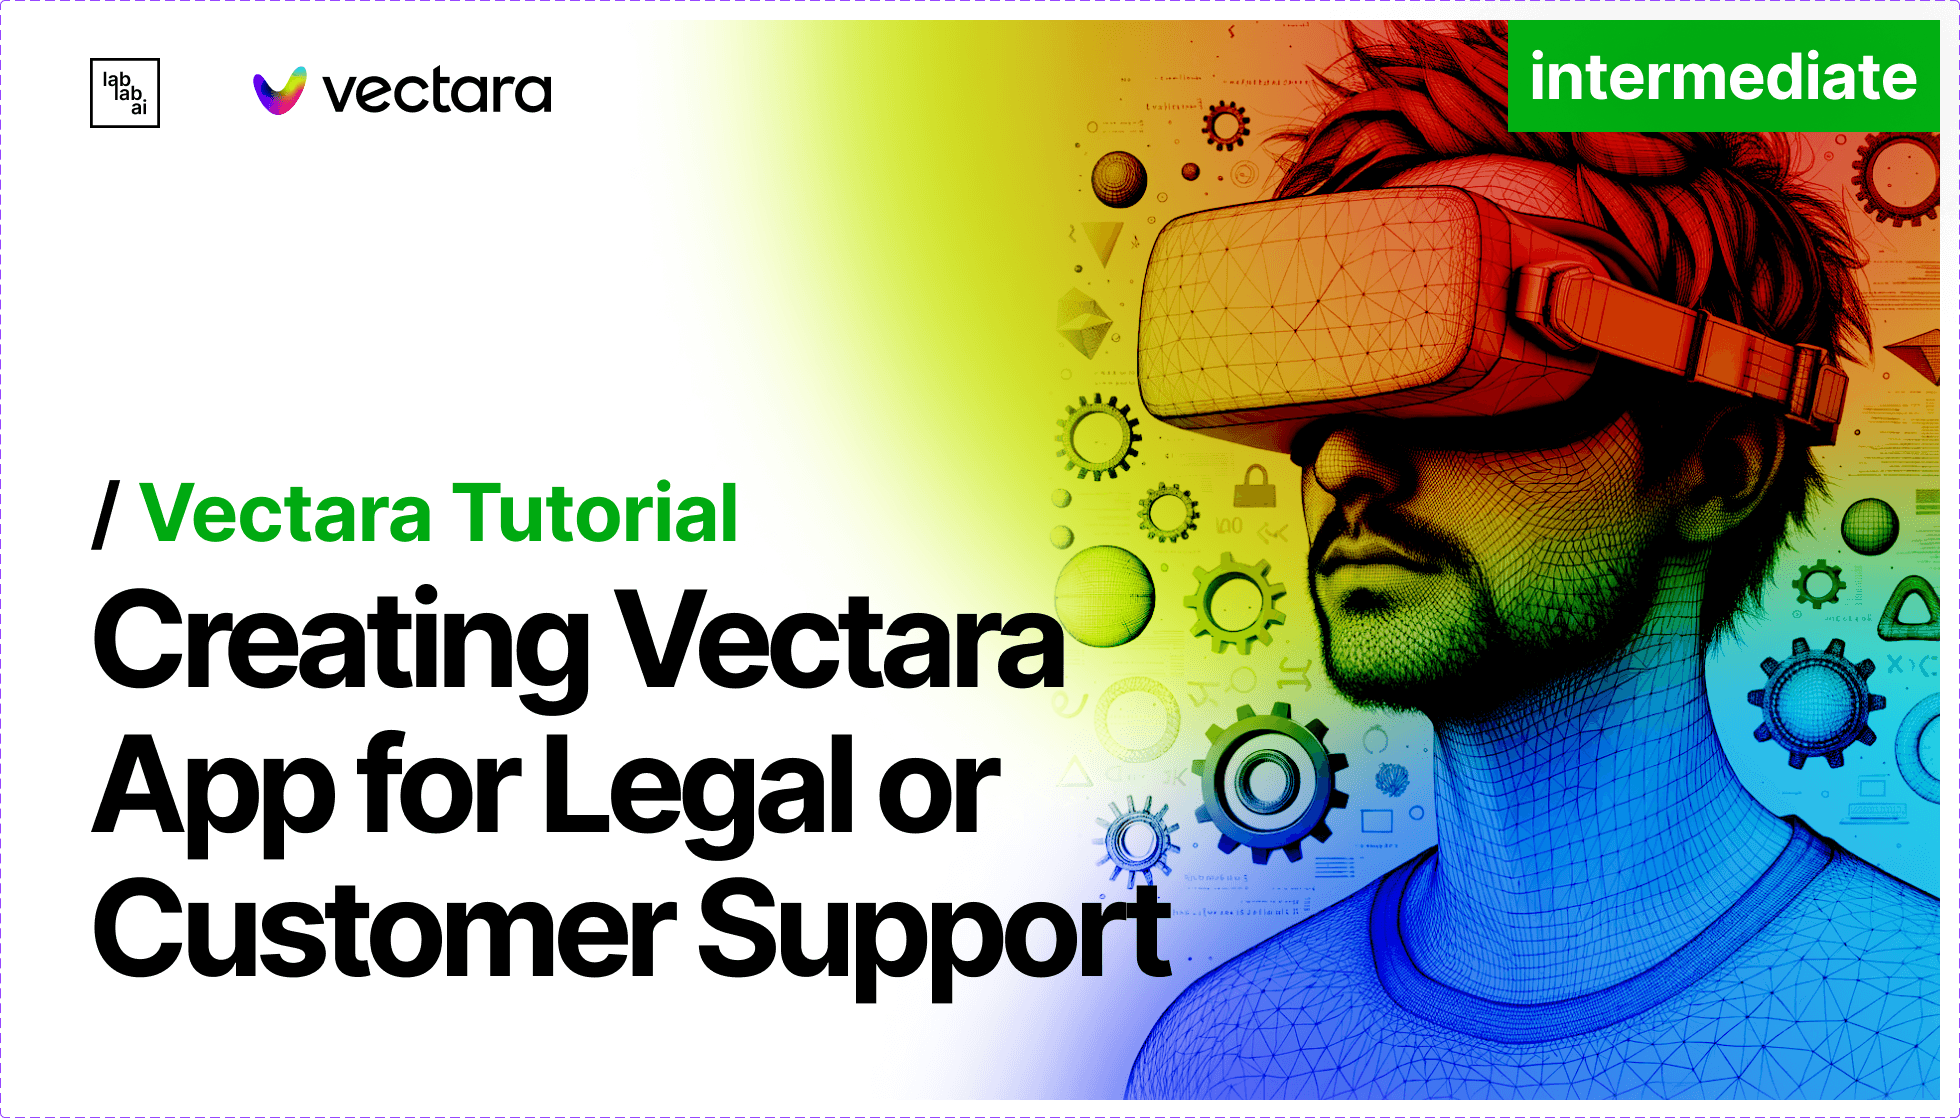 Vectara Advanced App Tutorial: Showcase The Creation Of Vectara App In Legal Or Customer Support Use Case